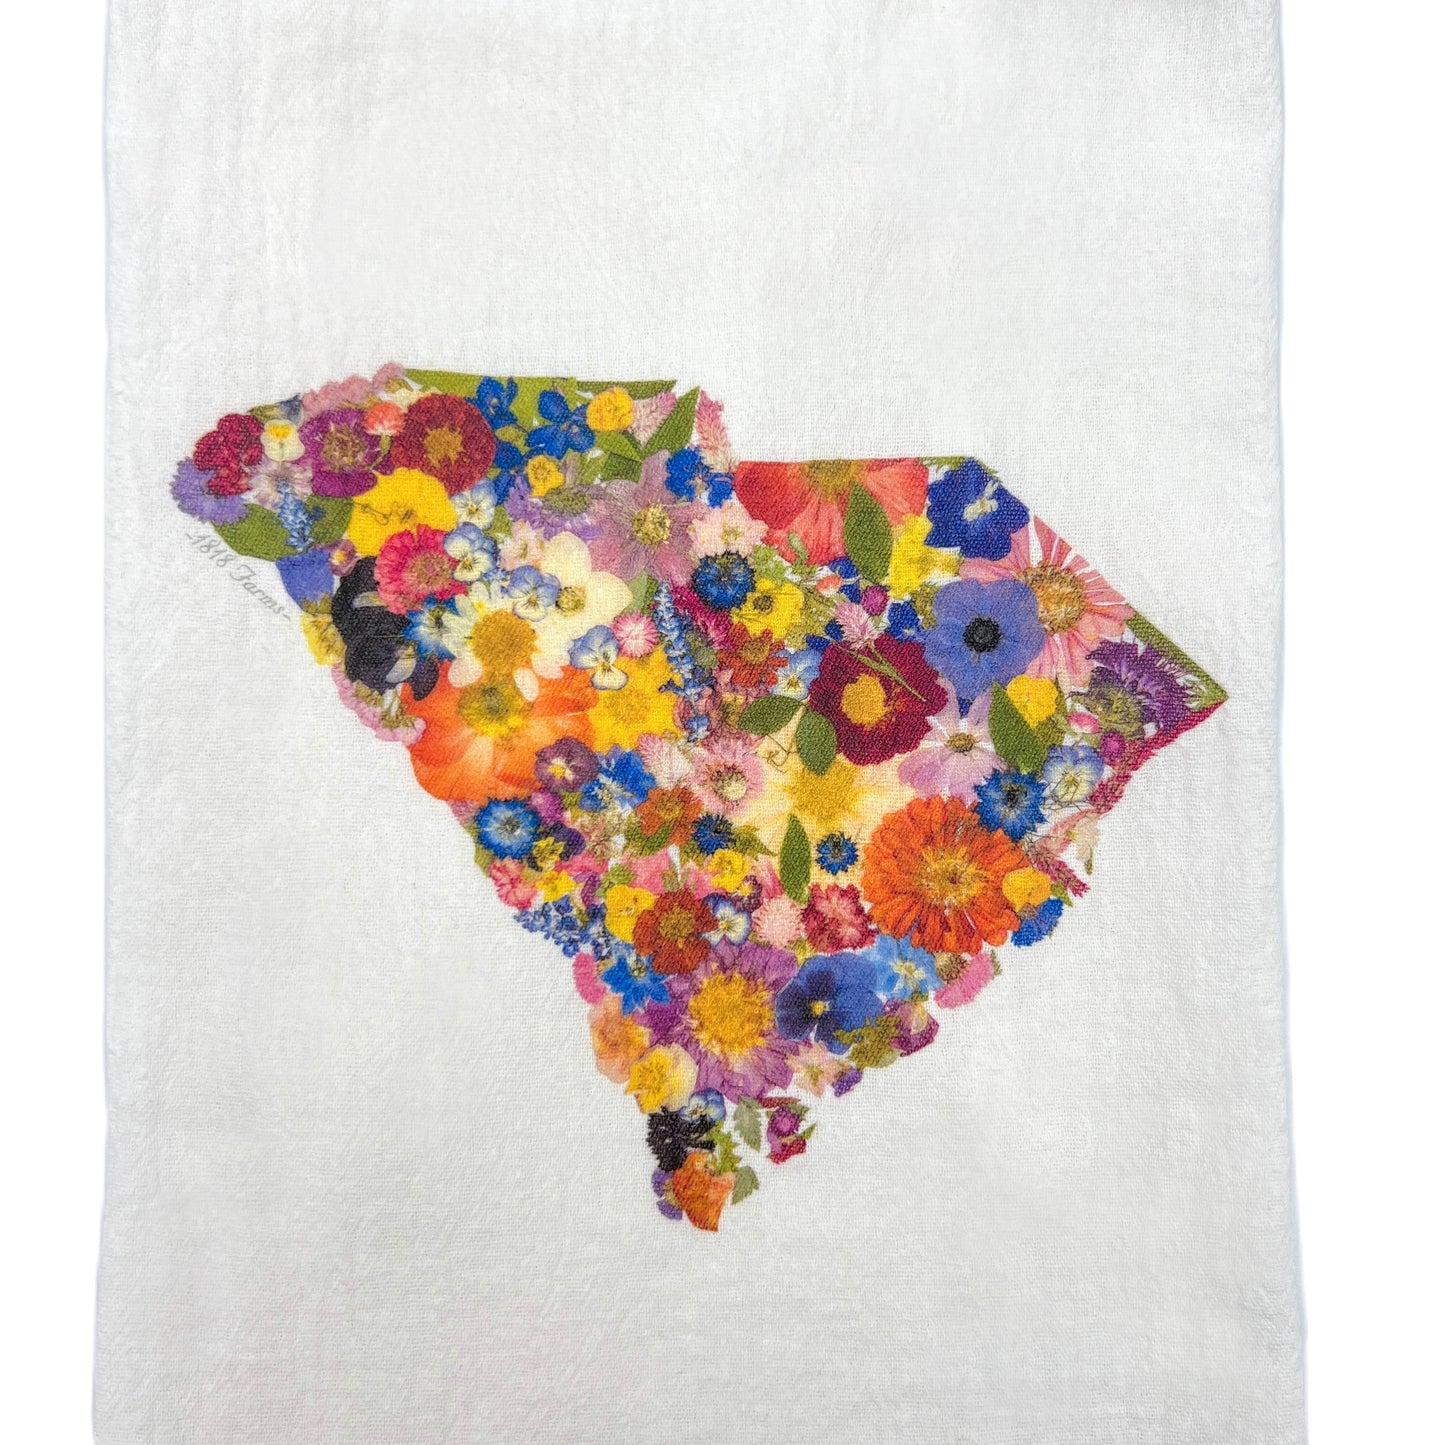 South Carolina Themed Flour Sack Towel  - "Where I Bloom" Collection Towel 1818 Farms   